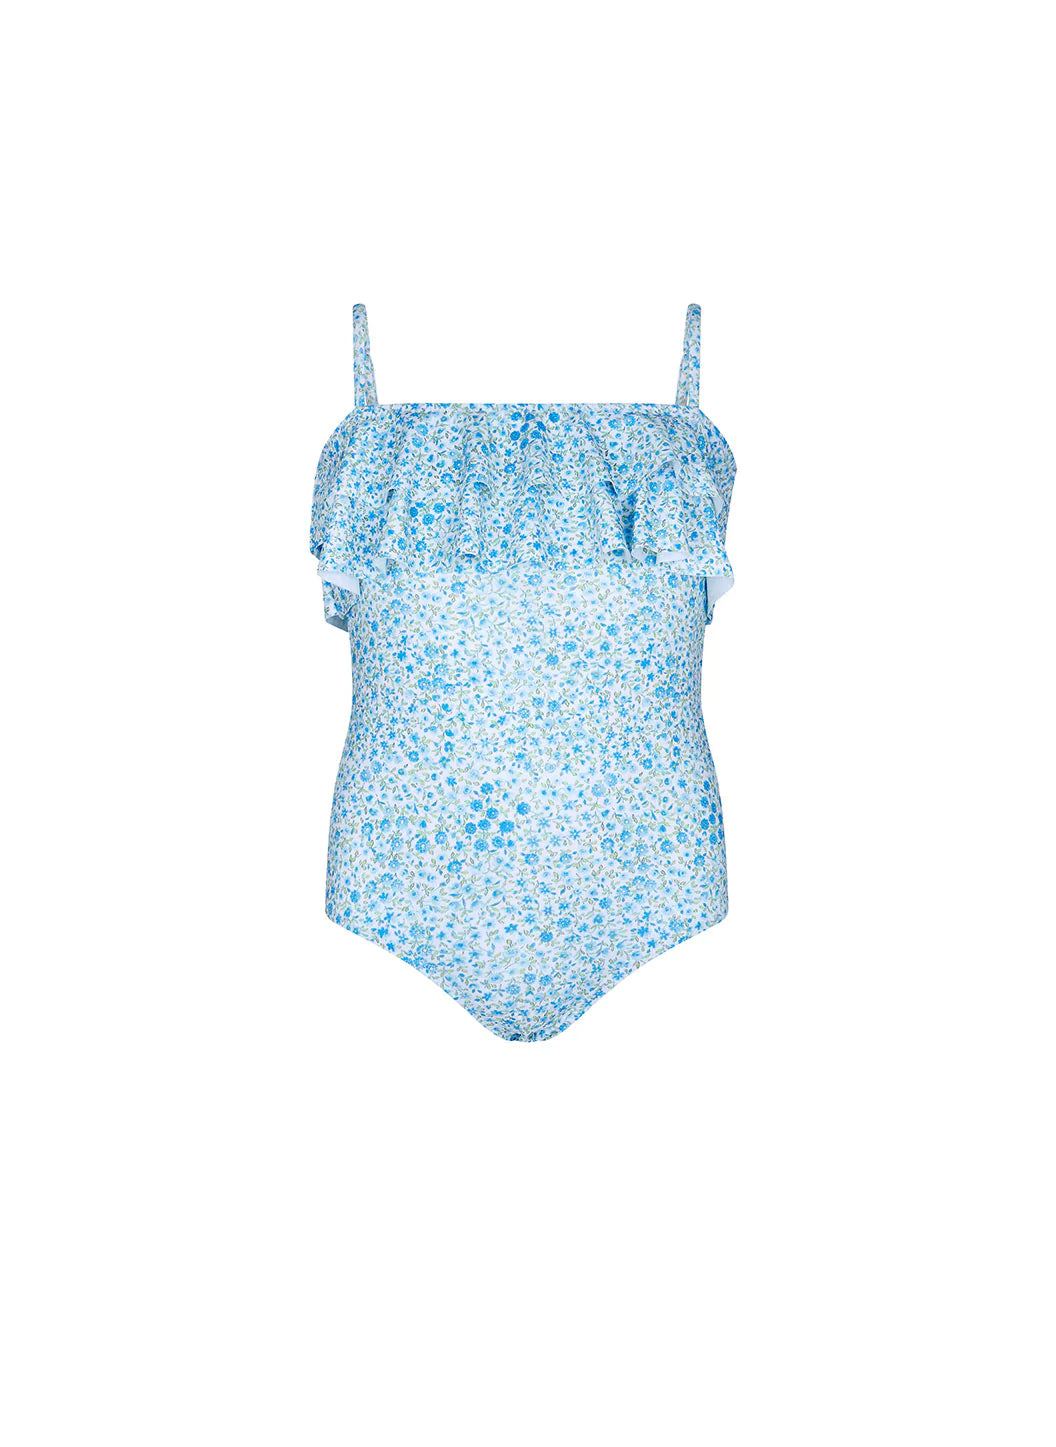 Girls_Ivy_Blue_Floral_Swimsuit_Cutout_2023